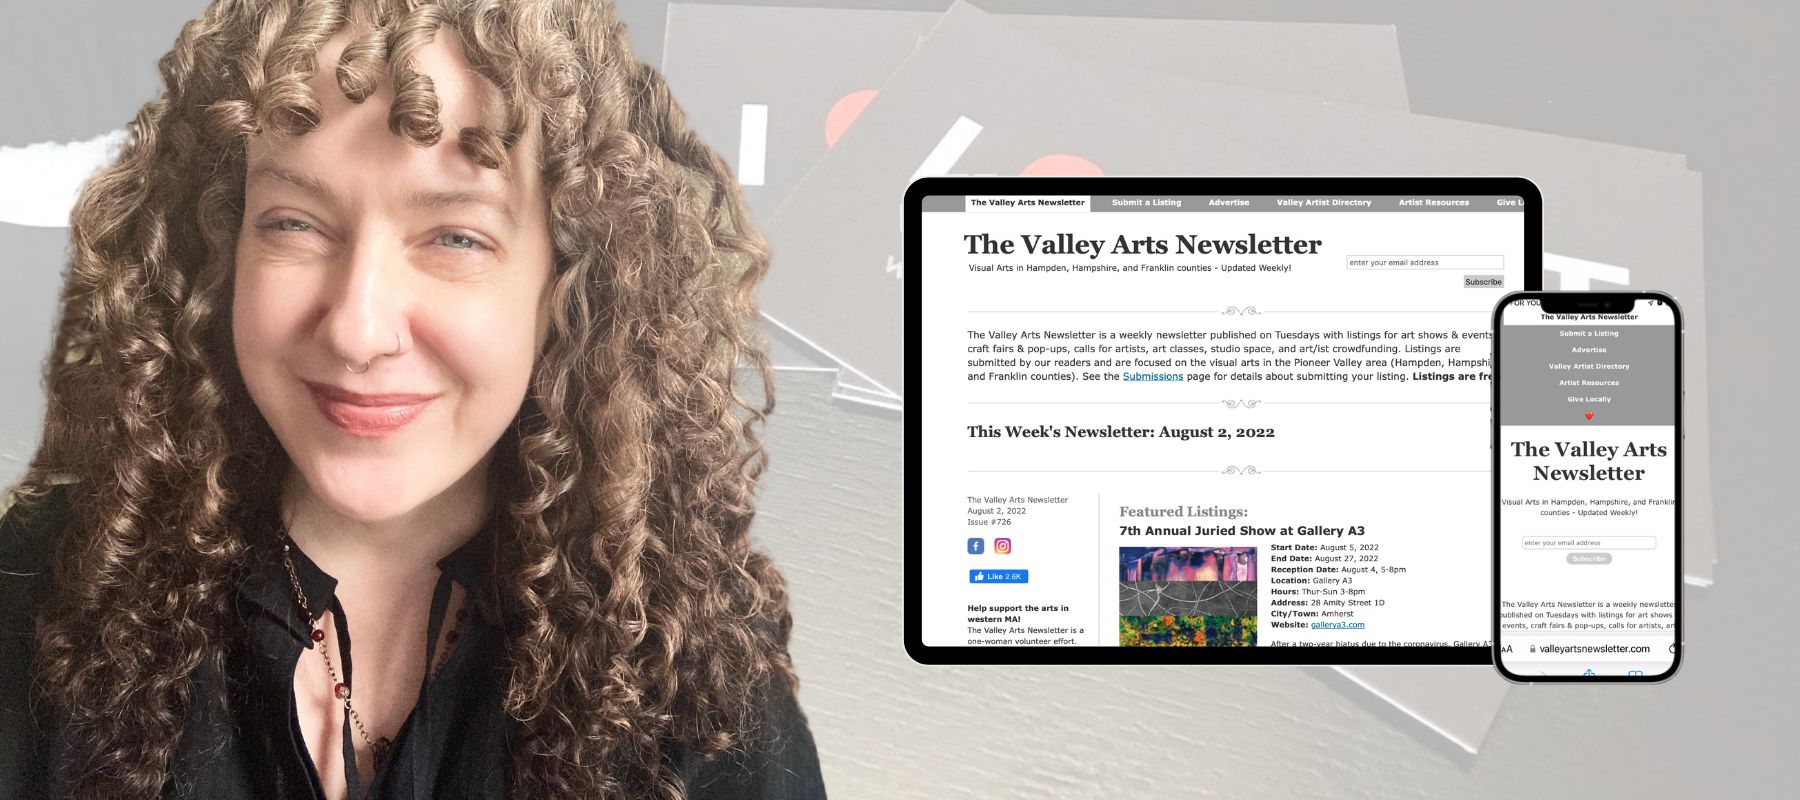 Bronwen Hodgkinson has been running the Valley Arts Newsletter for fourteen years.